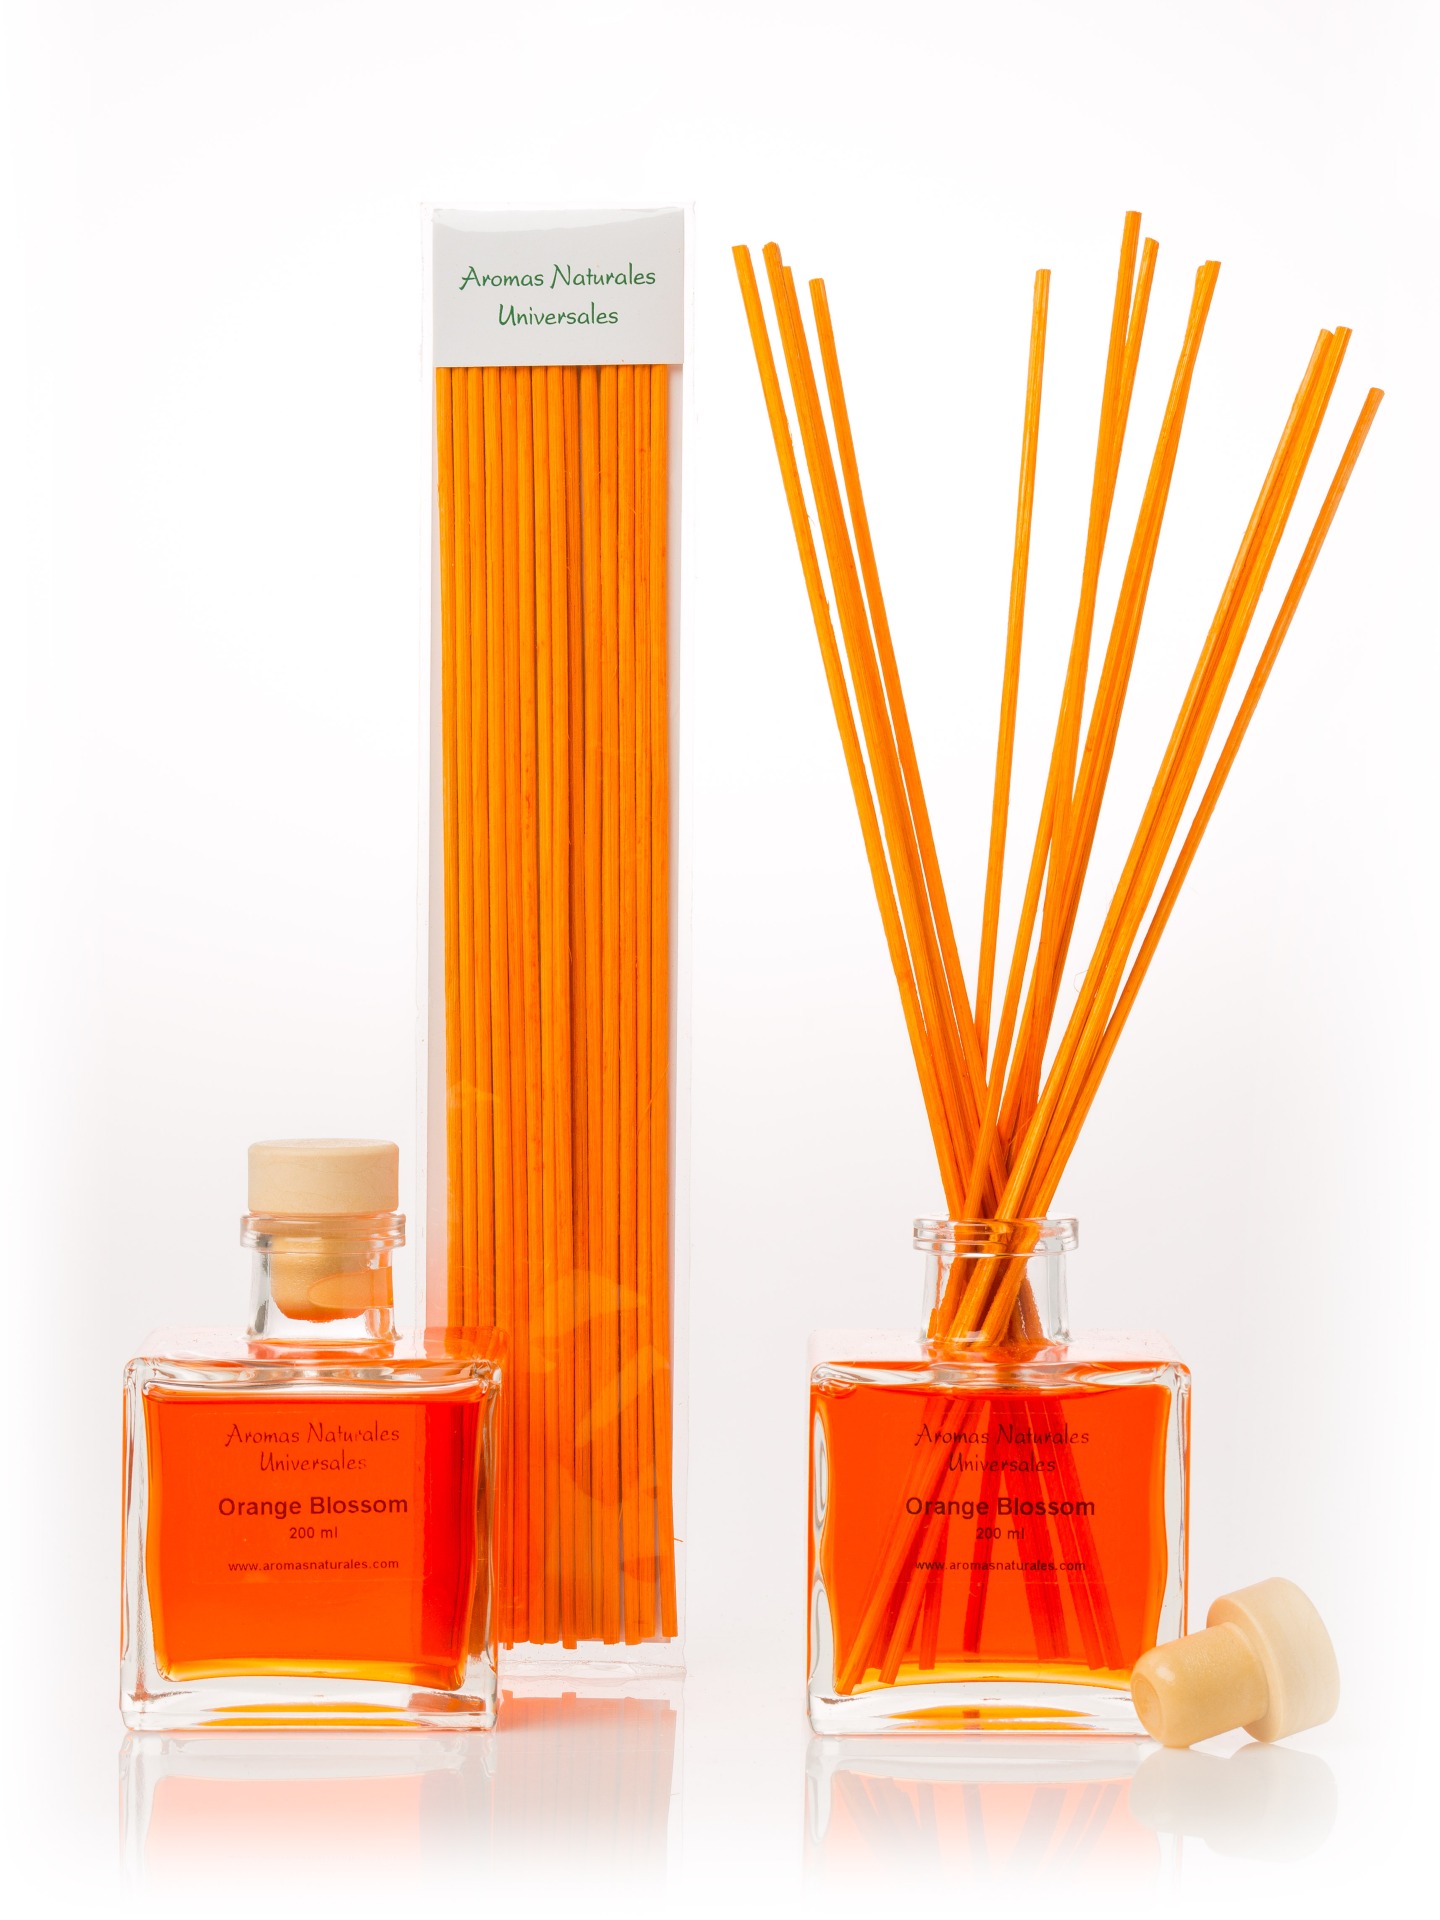 Aromas Naturales - MIKADO "Orange Blossom" / Oranjebloesem